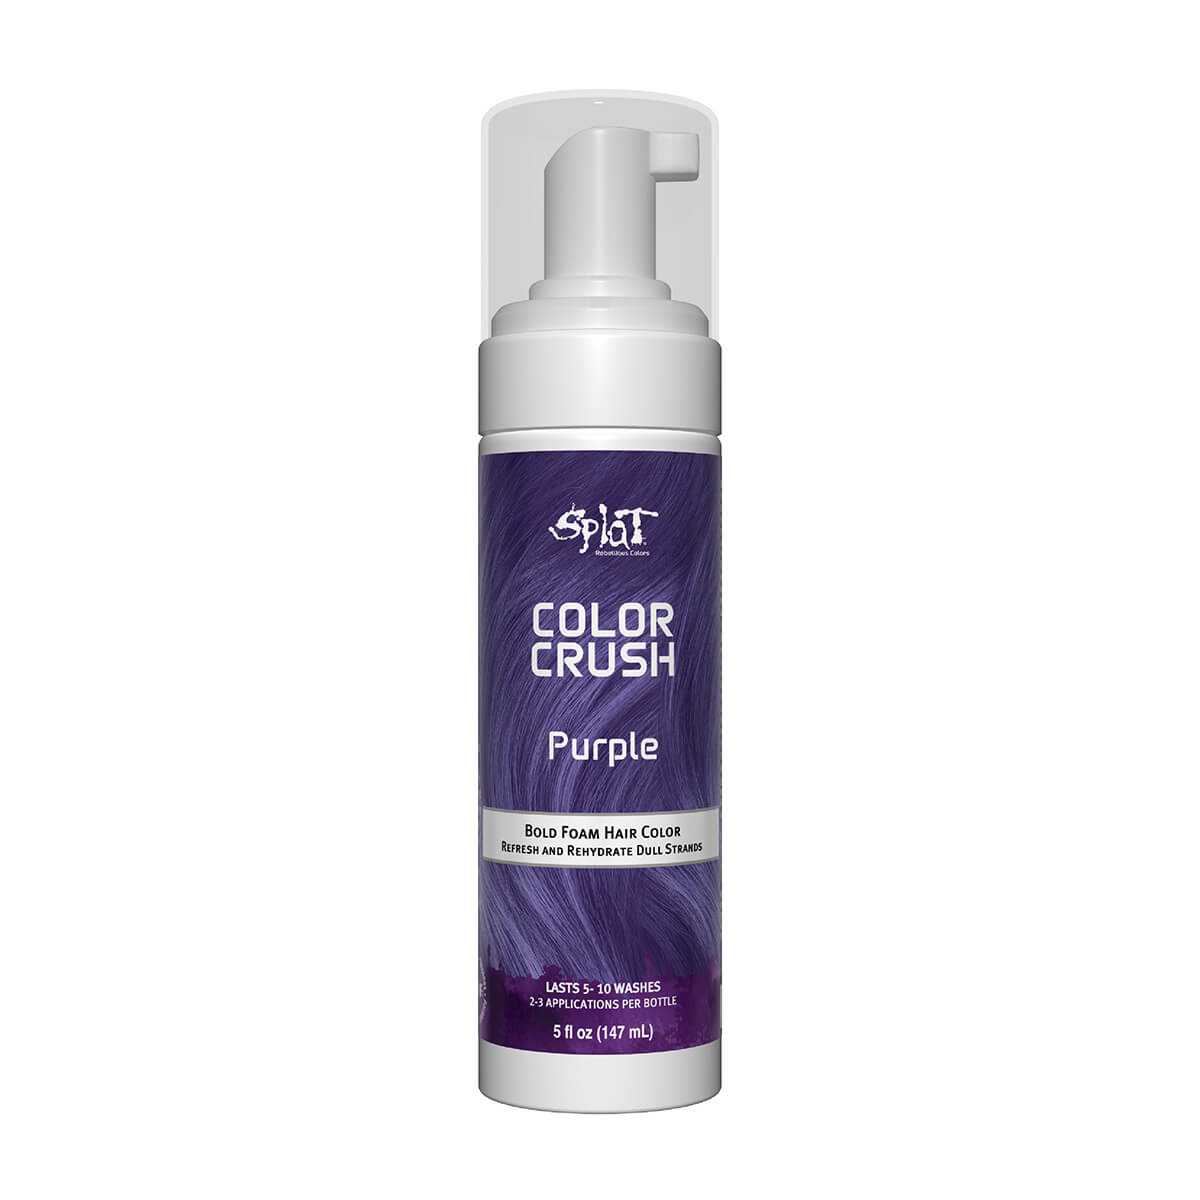 Splat Color Crush - Purple